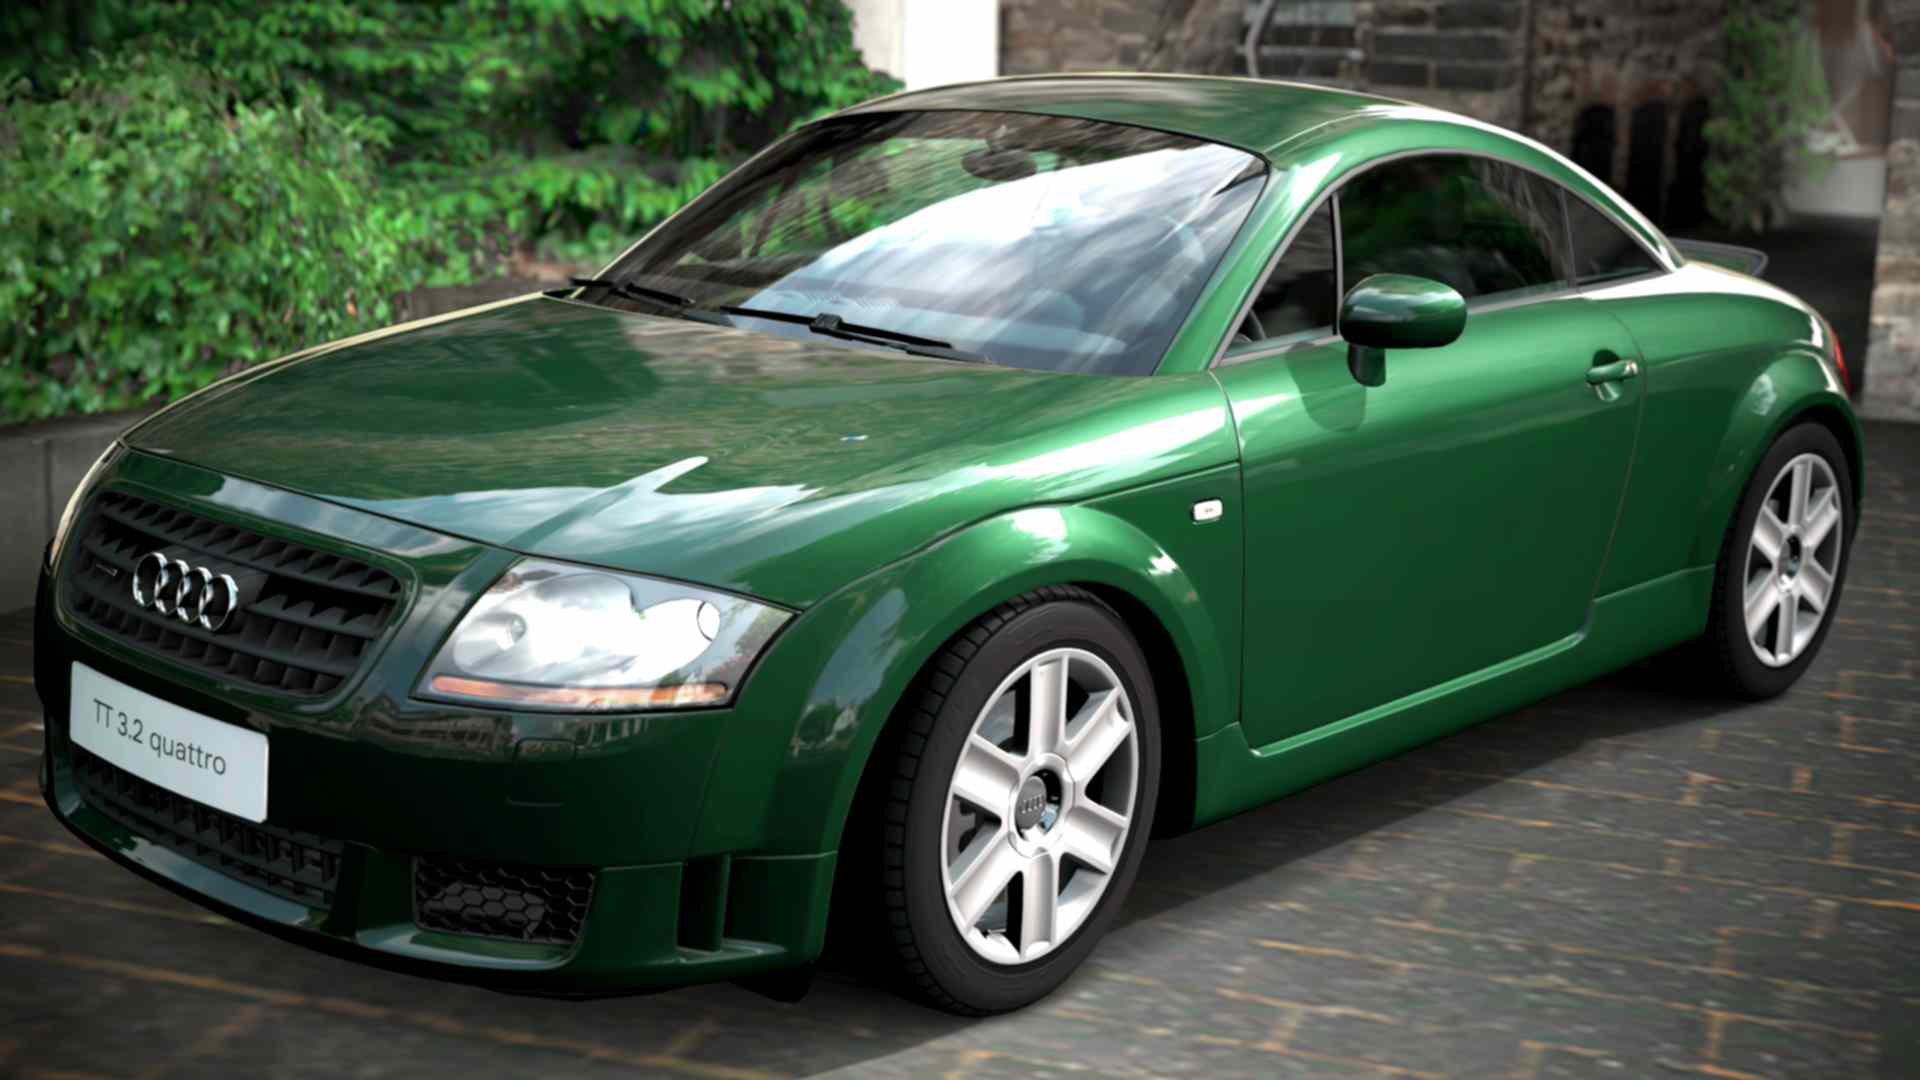 Olive Green Metallic Audi TT 3.2 Quattro